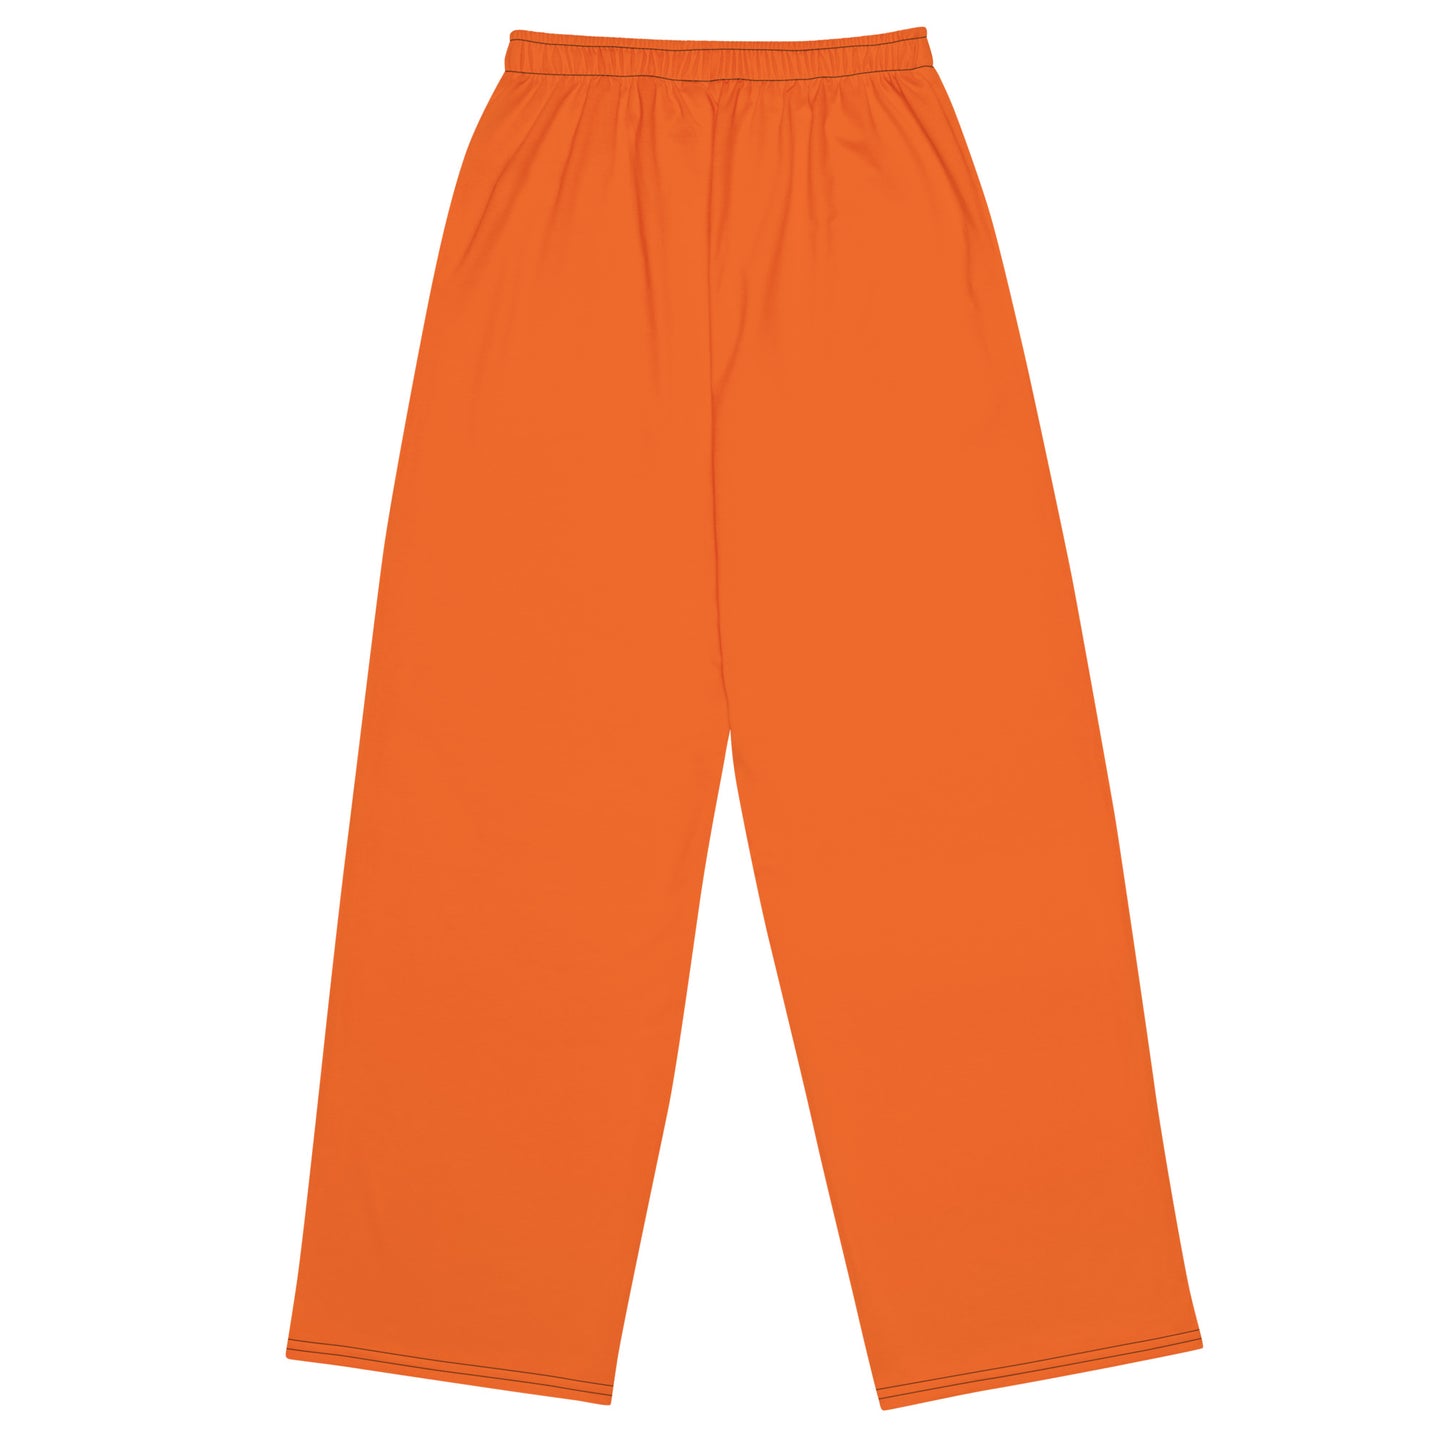 Orange Unisex Pants - OG Hippie Chick